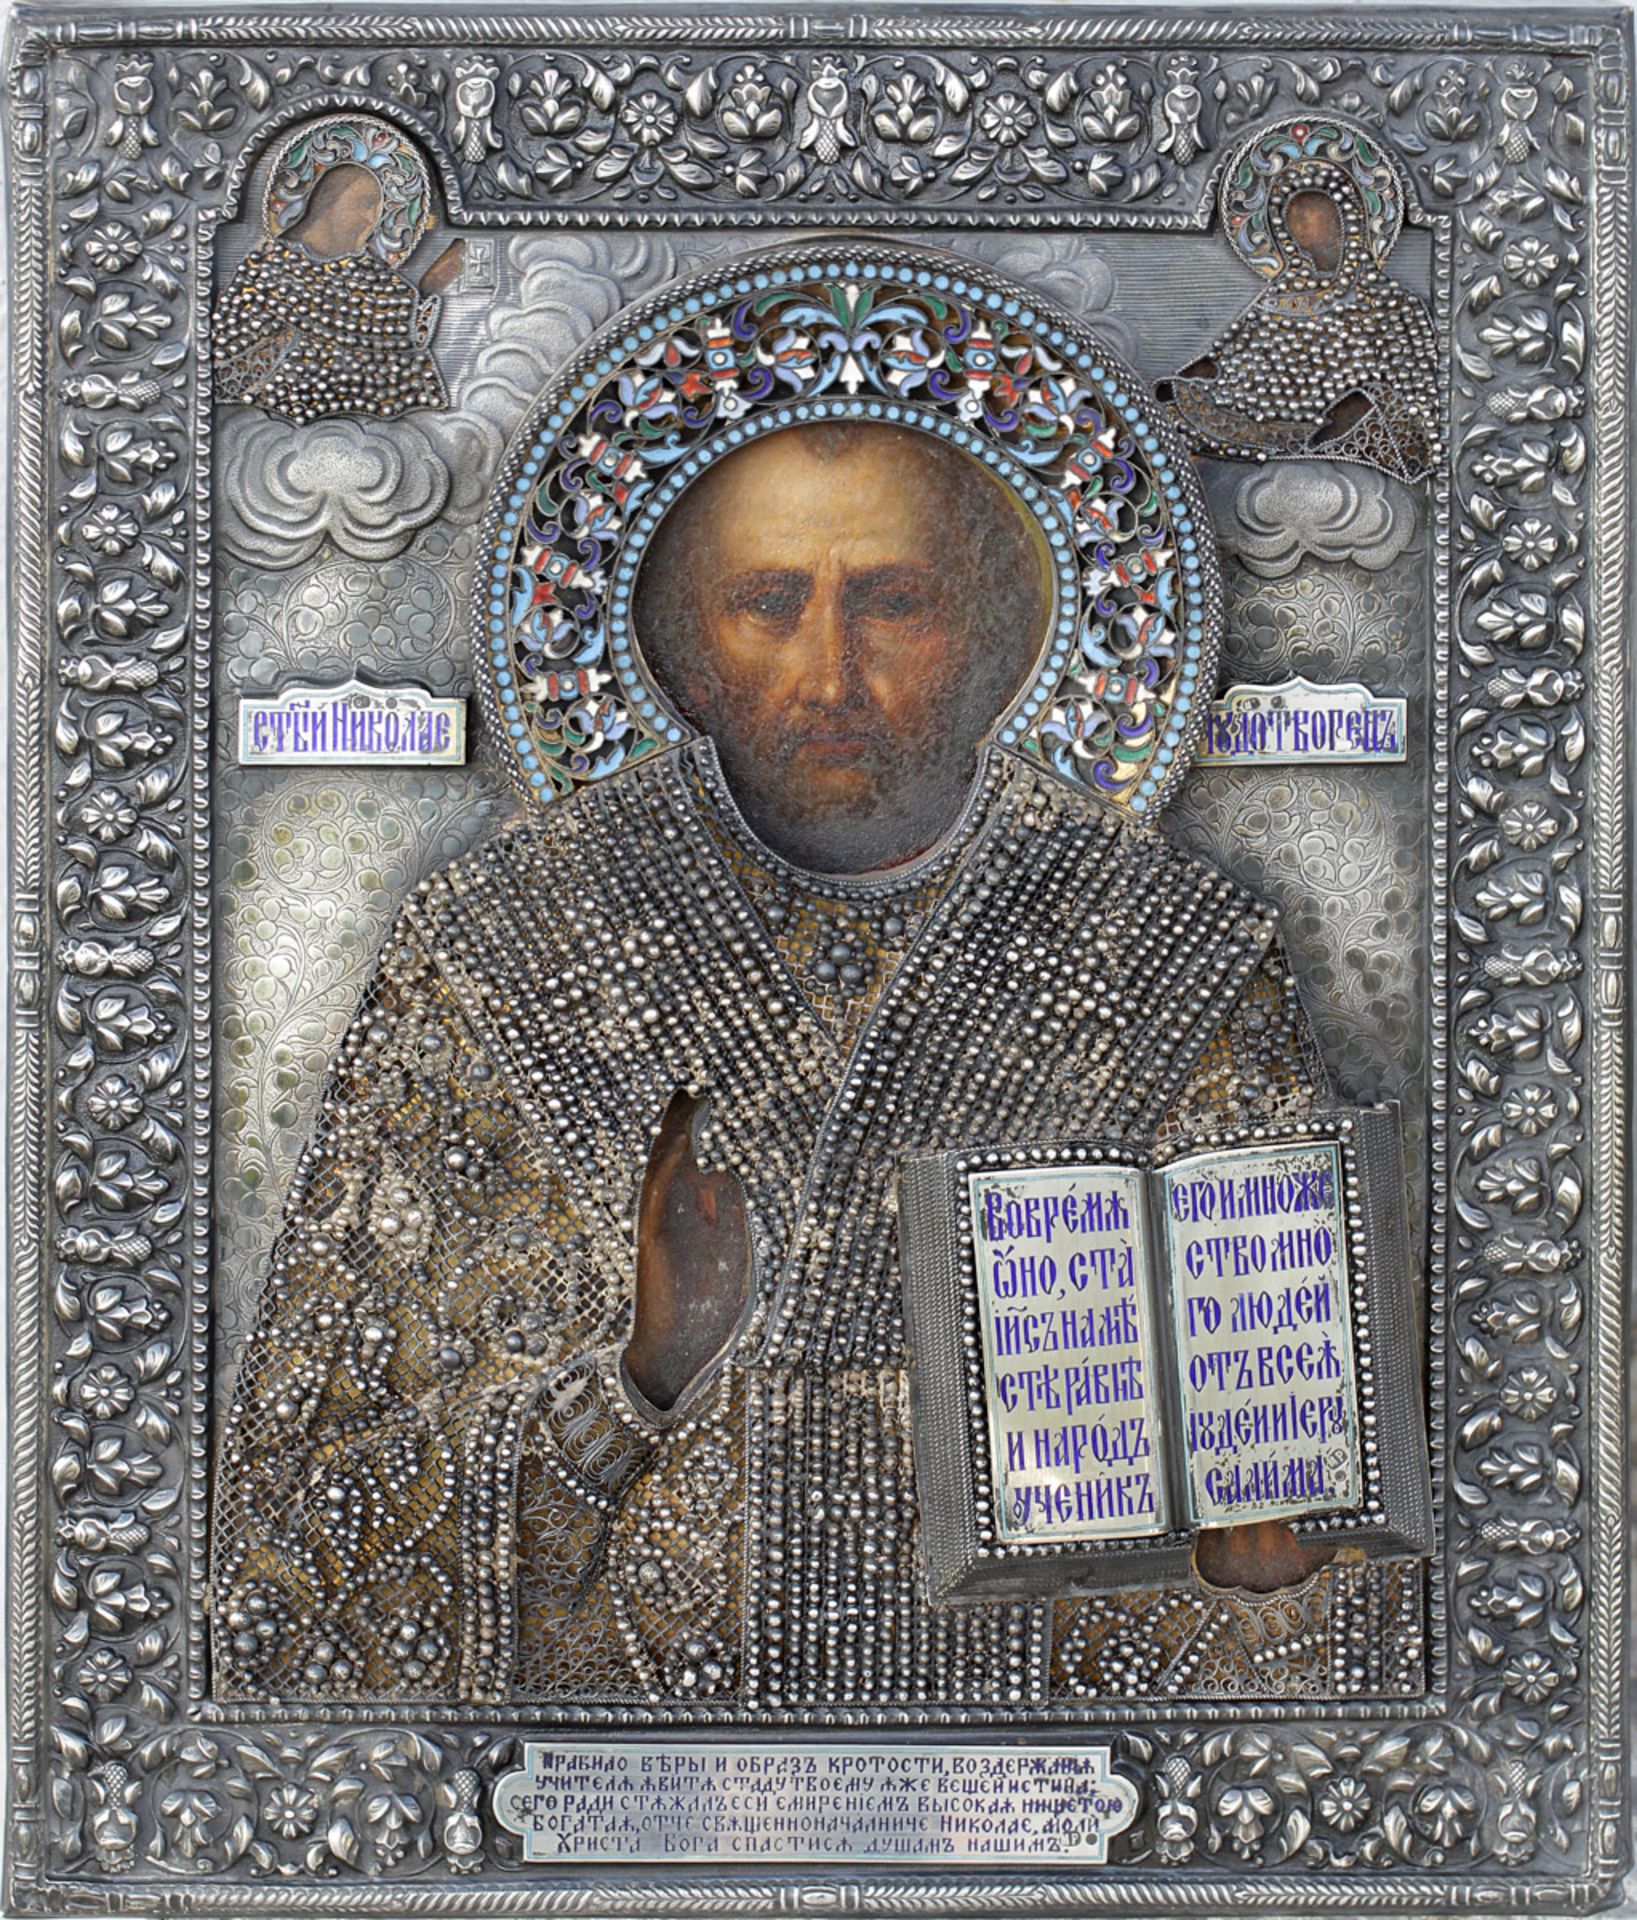 Ikone: Der Heilige Nikolaus die Bibel vorzeigend, Moskau, Anfang 20. Jh.